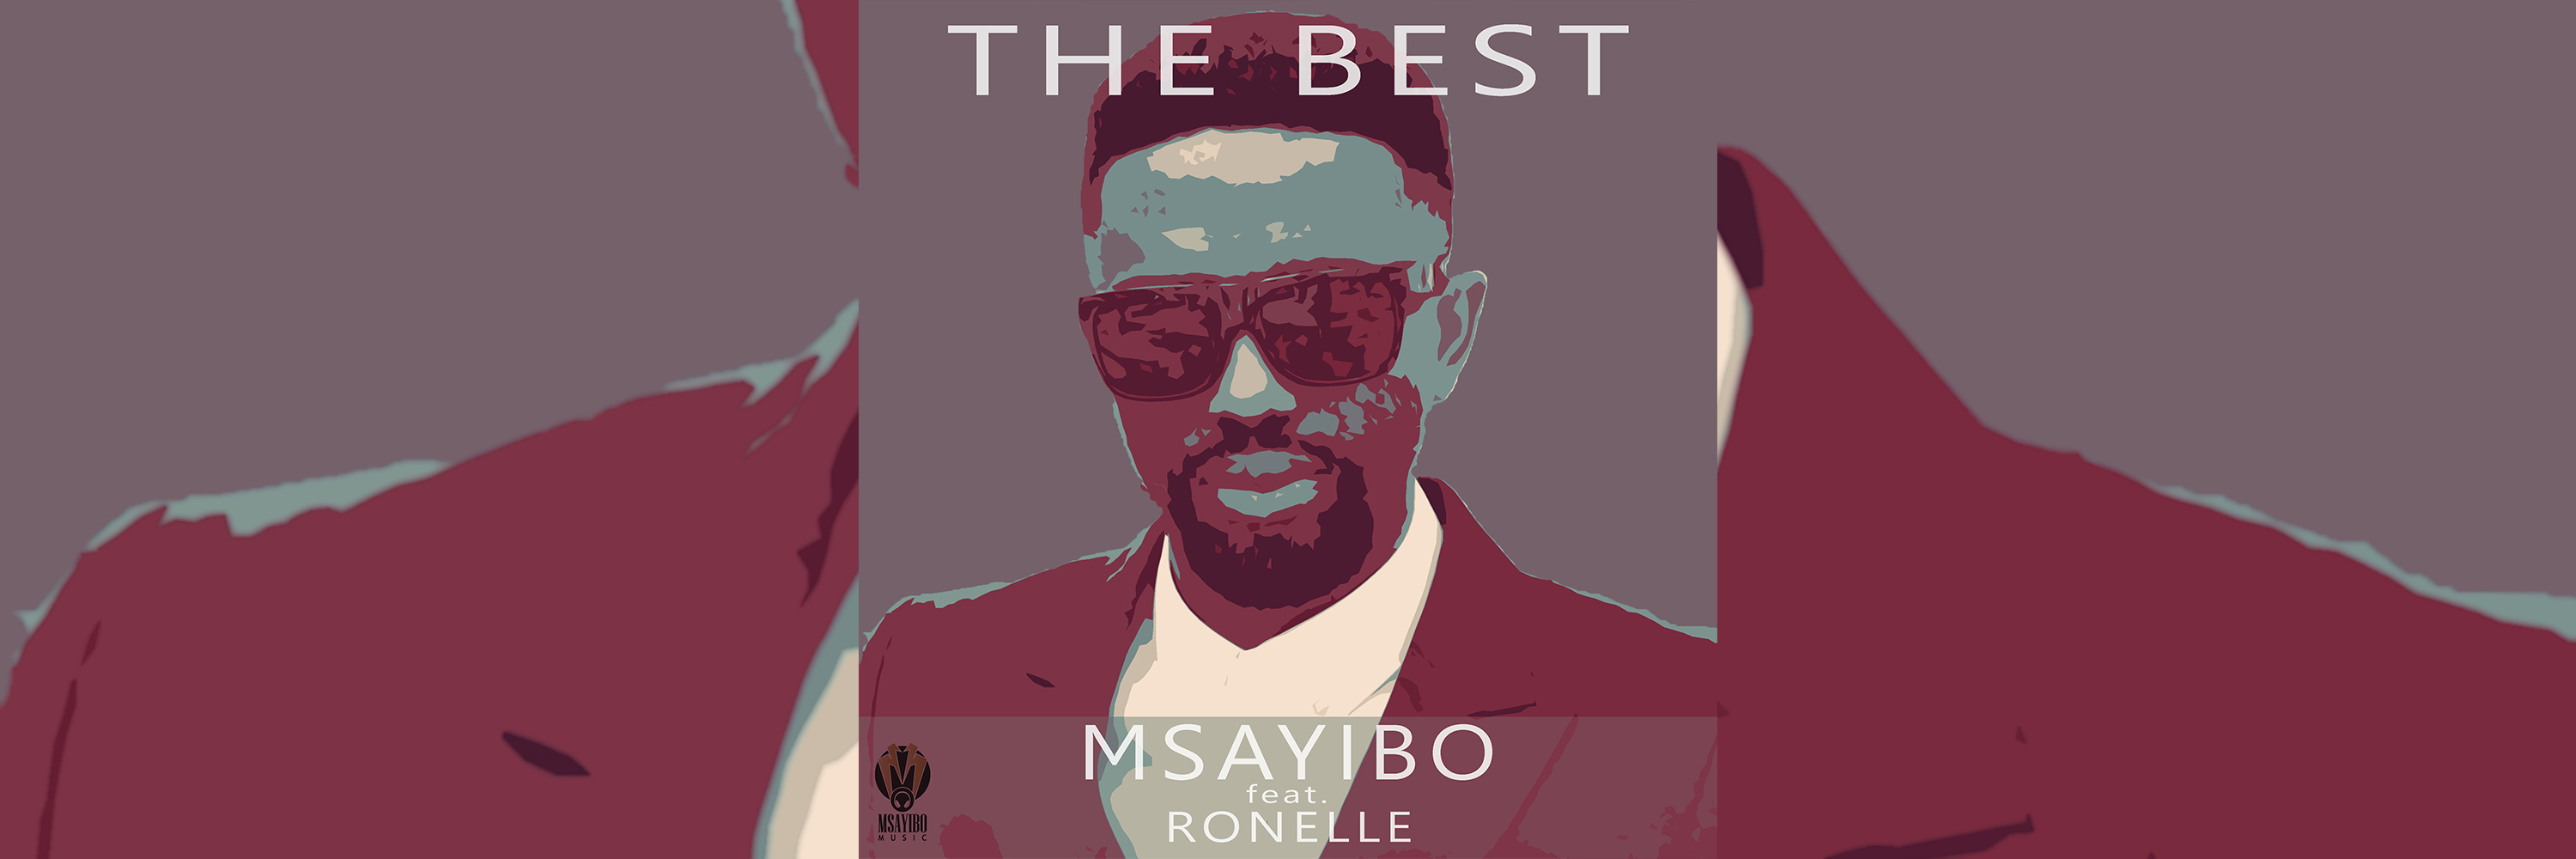 Msayibo - The Best [Slider]